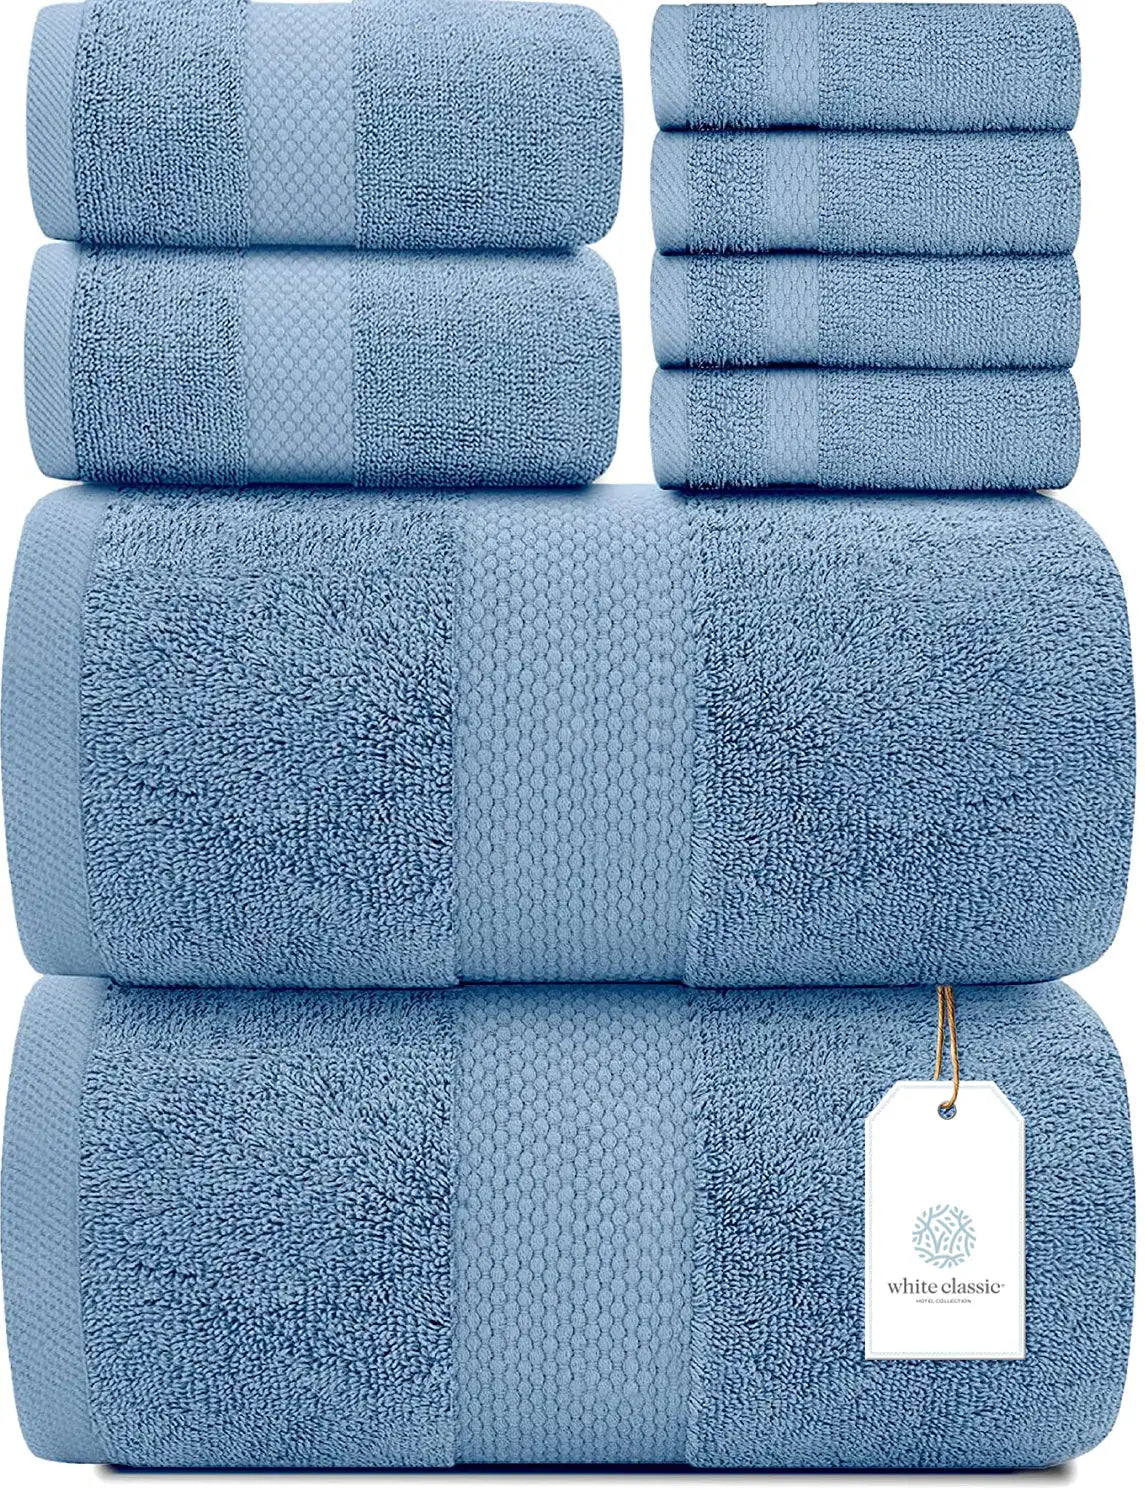 Hotel Collection Luxury 2 Bath Towels | 2 Hand Towels | 4 Washcloths - 8 Piece Set